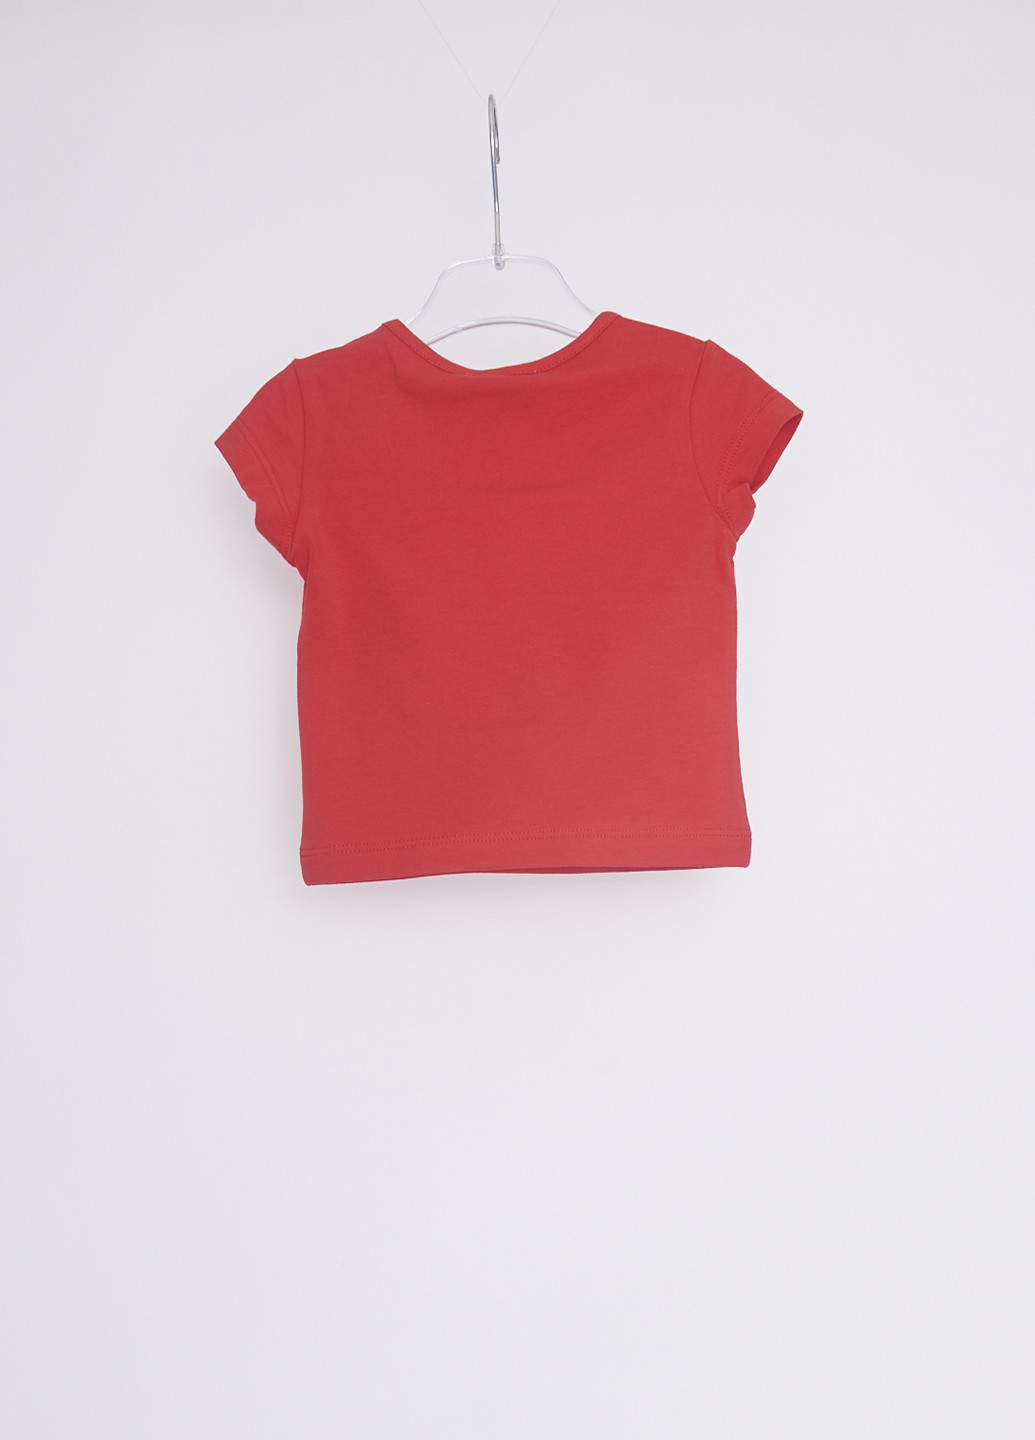 Красная летняя футболка Mandarino